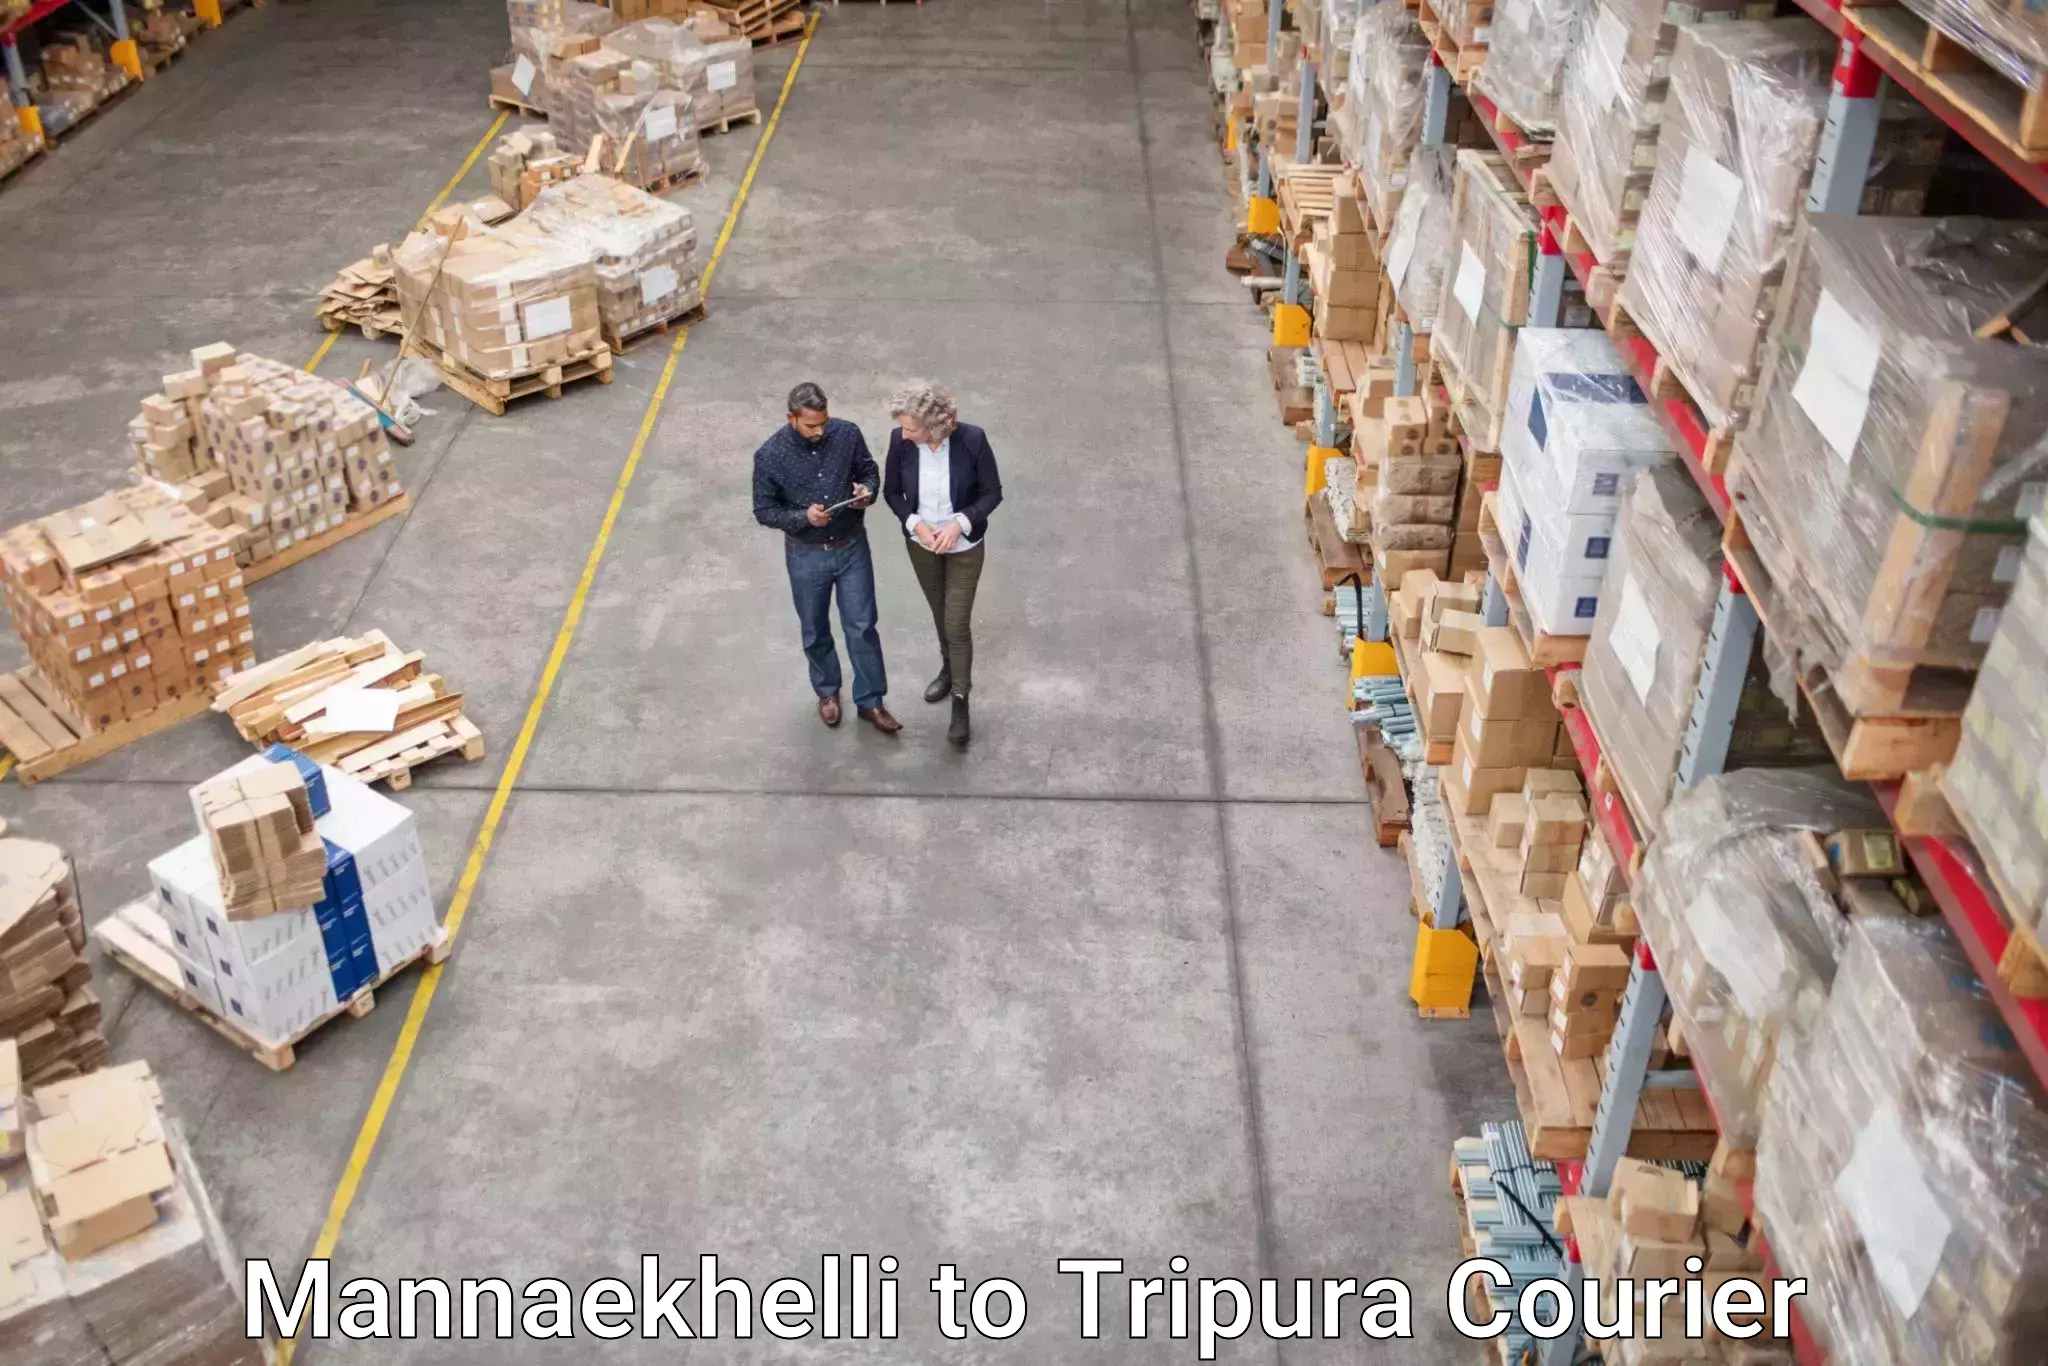 Cargo delivery service Mannaekhelli to South Tripura